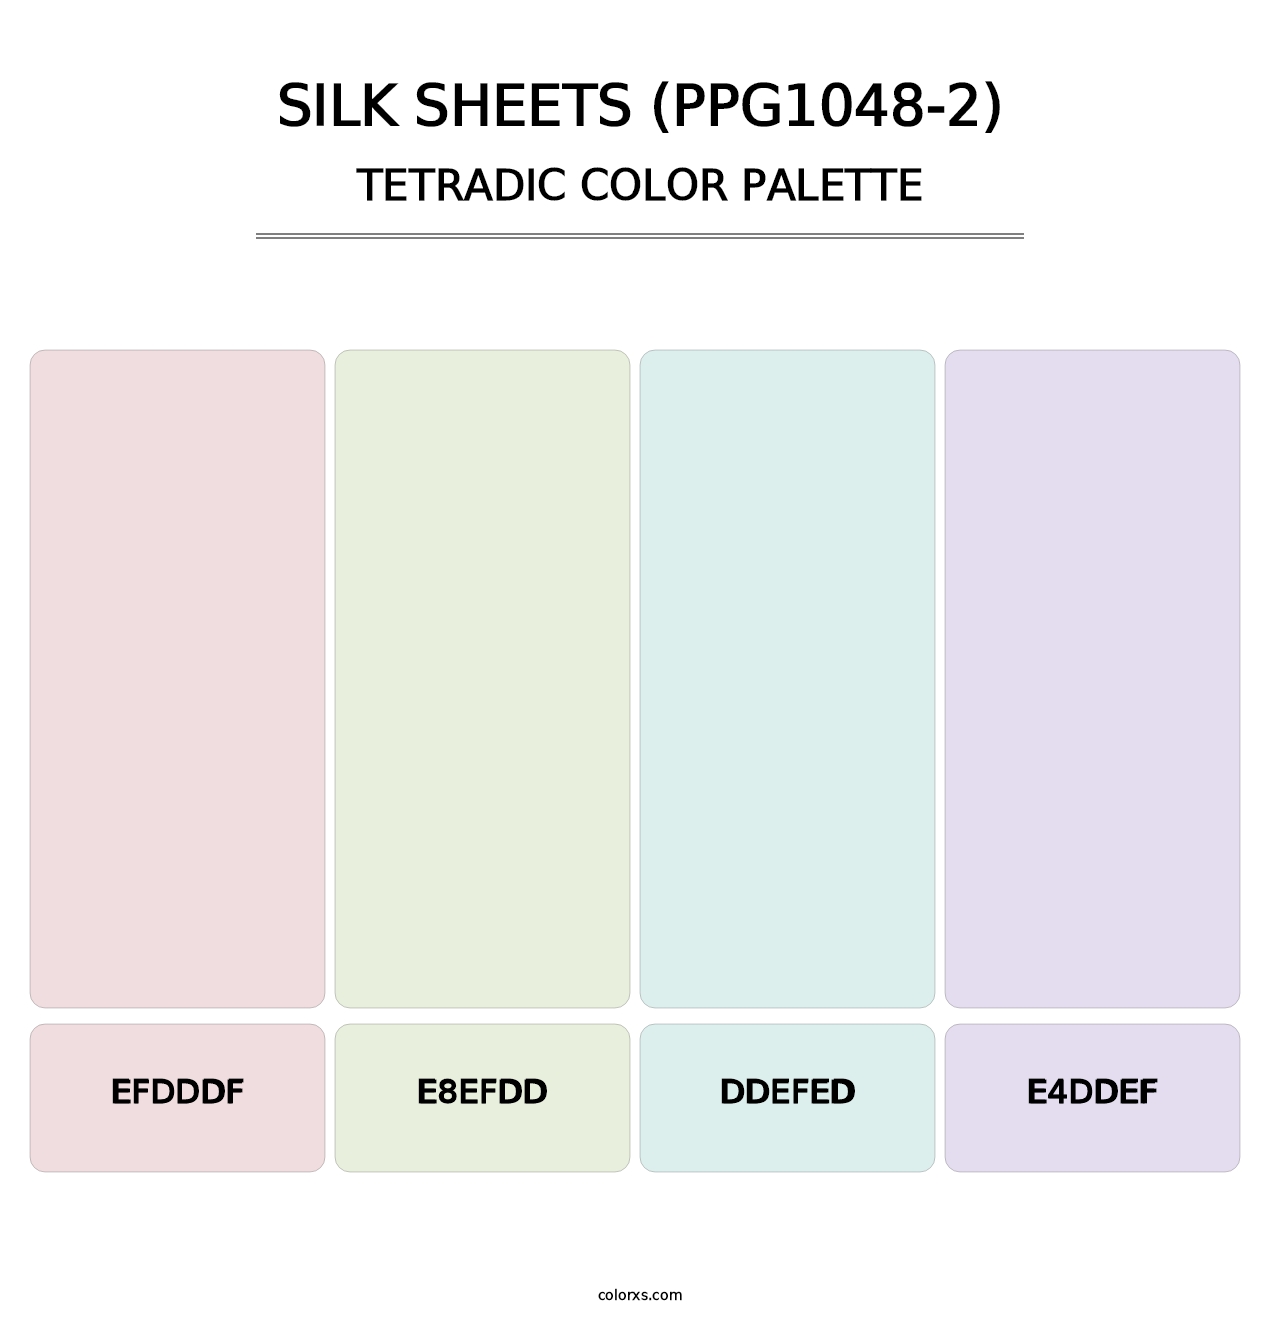 Silk Sheets (PPG1048-2) - Tetradic Color Palette